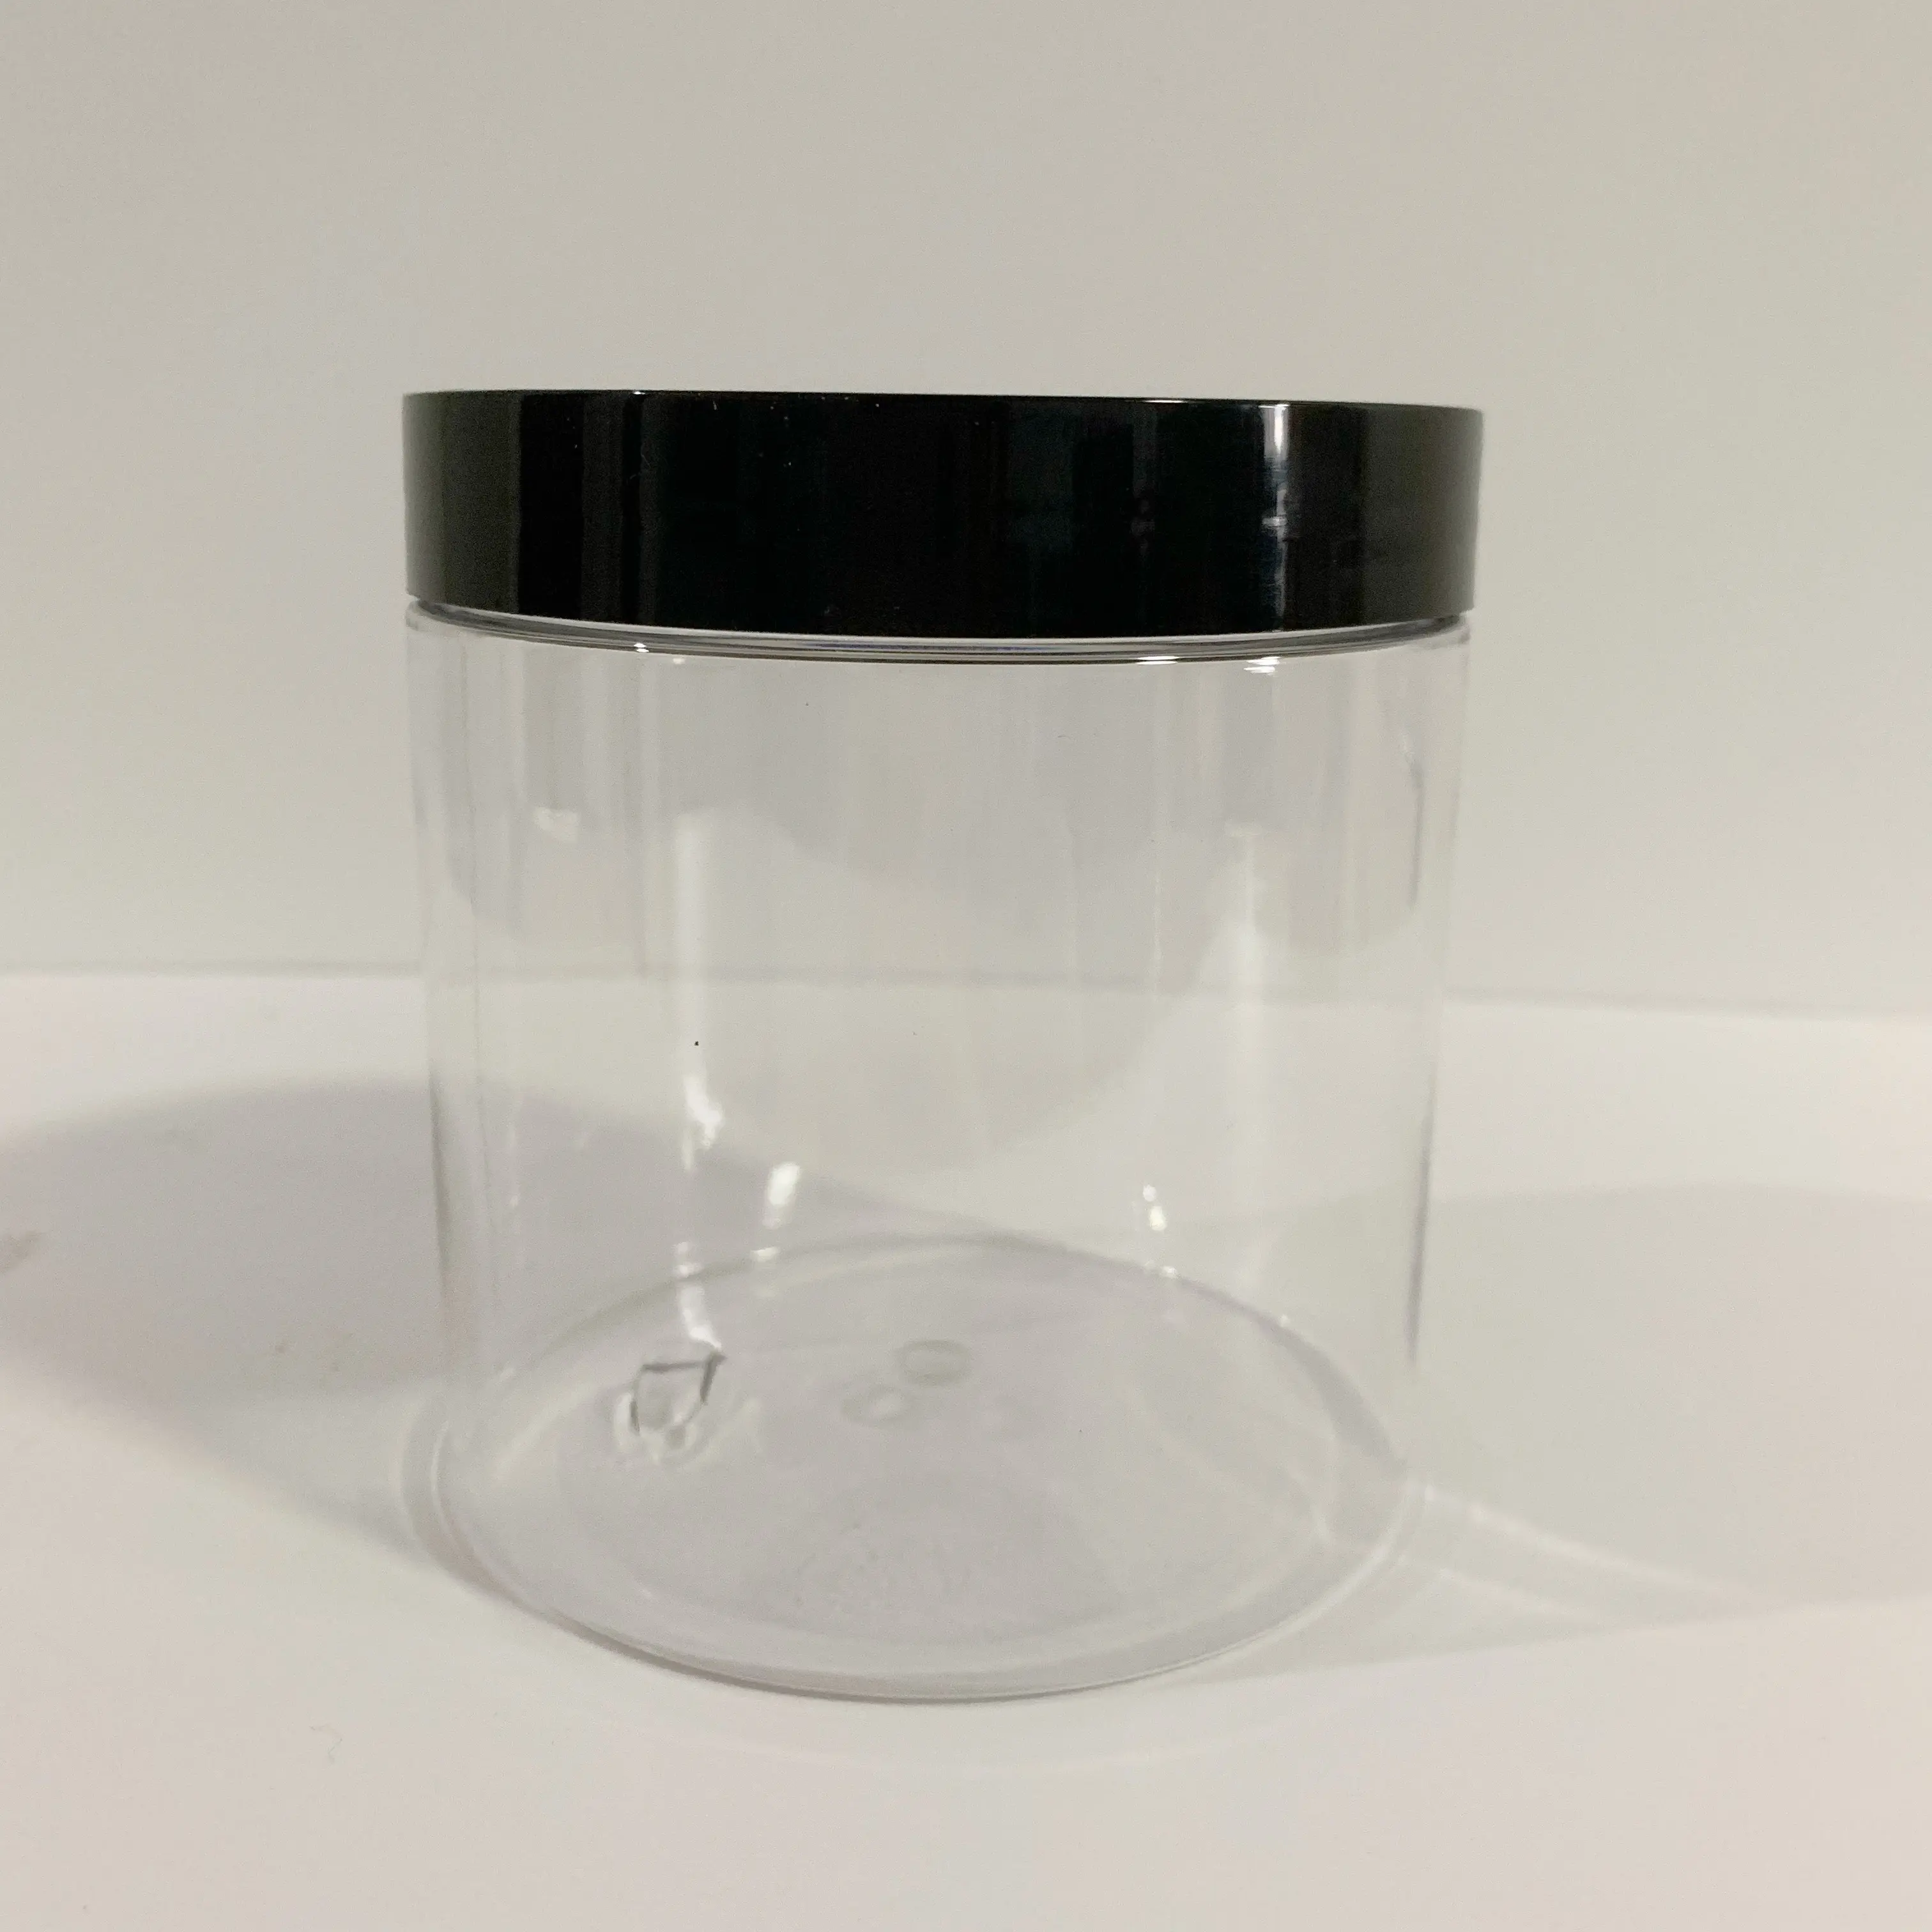 Tarro cosmética cristal transparente y tapa negra 50ml.